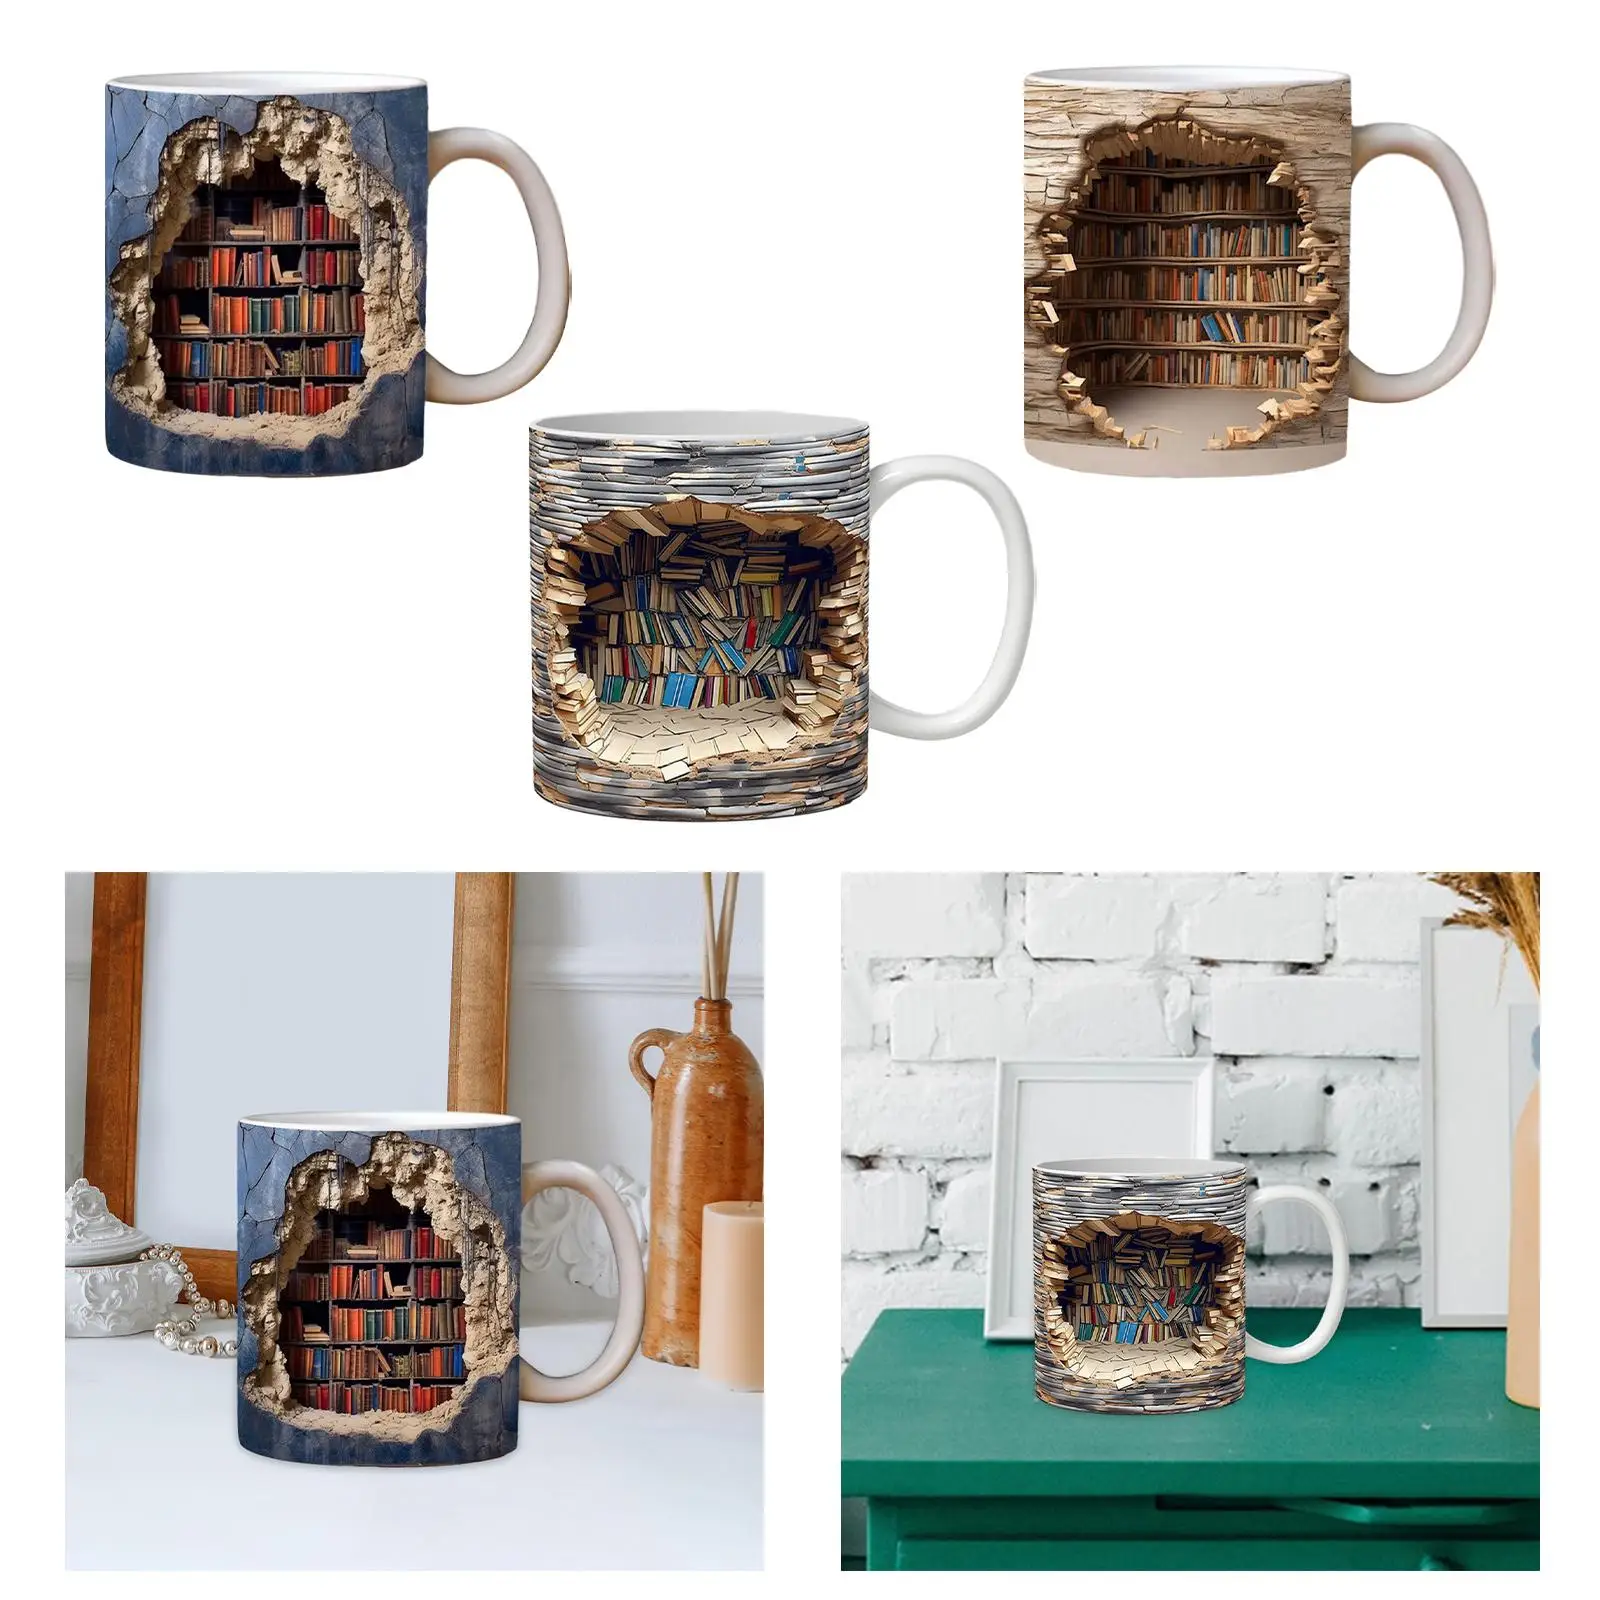 Bookworm Coffee Mug 3D Bookshelf Mug Handmade Pottery Mug Tea Cup Gift for Readers Book Lovers Coffee Mug Book Club Drinking Cup